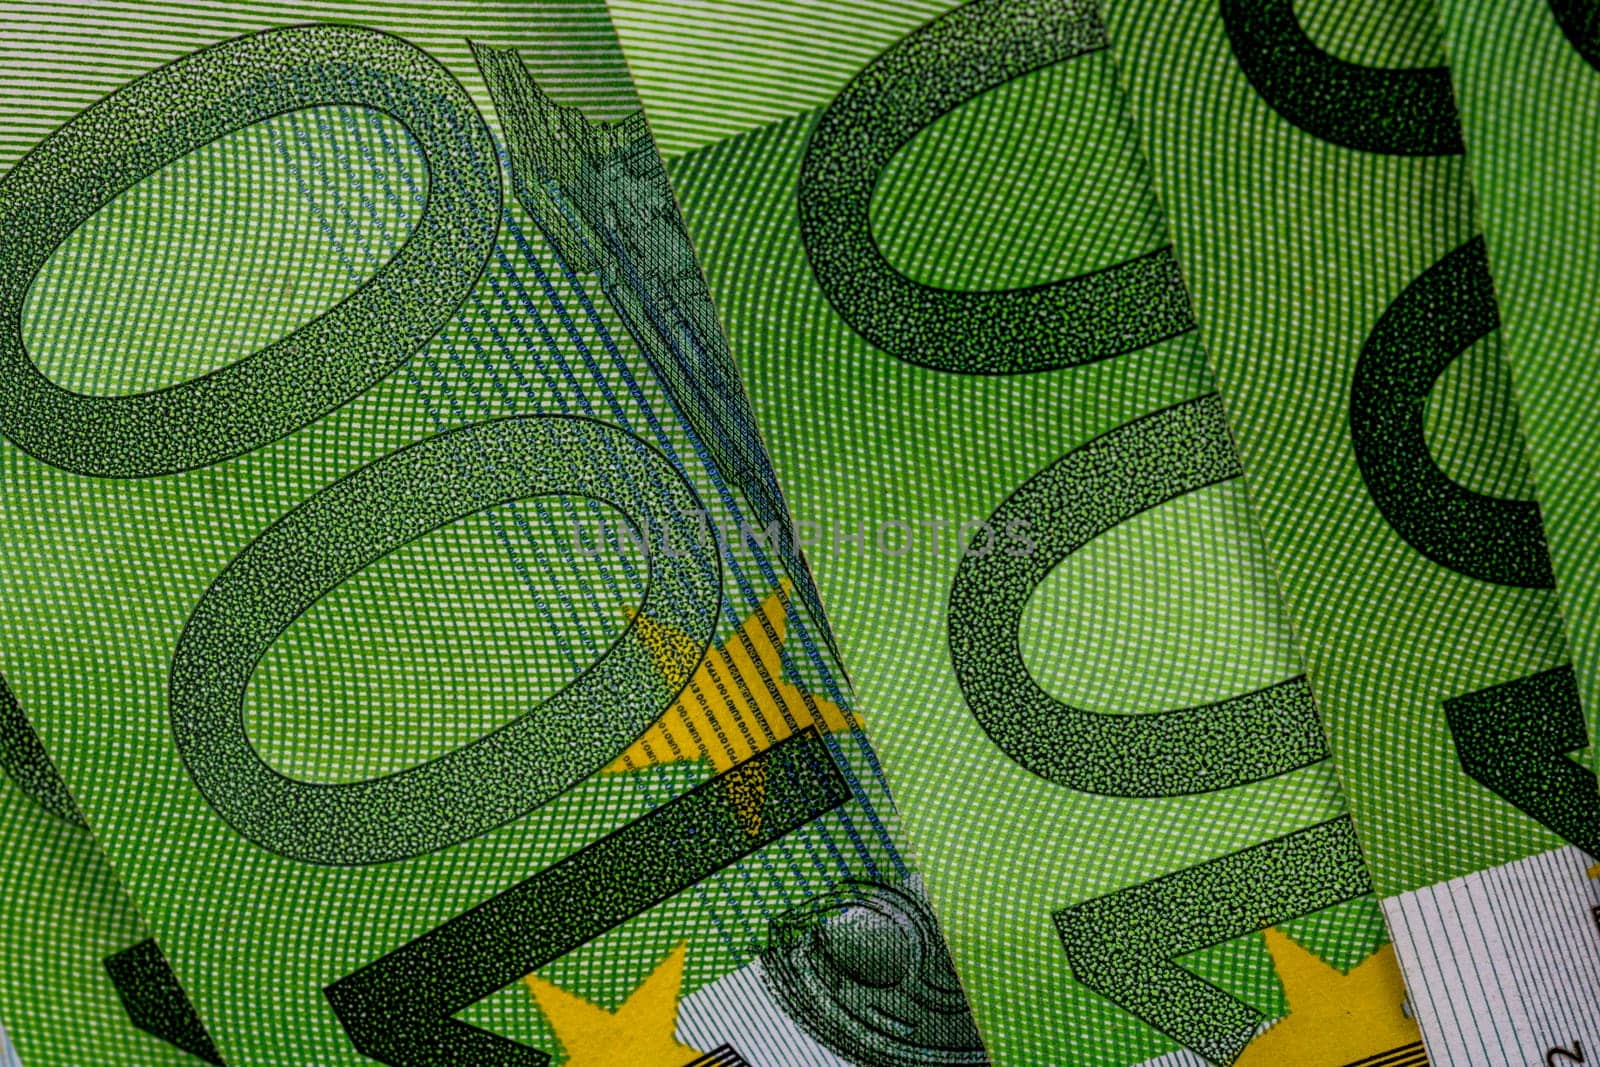 EURO money banknotes, detail photo of EUR. European Union currency